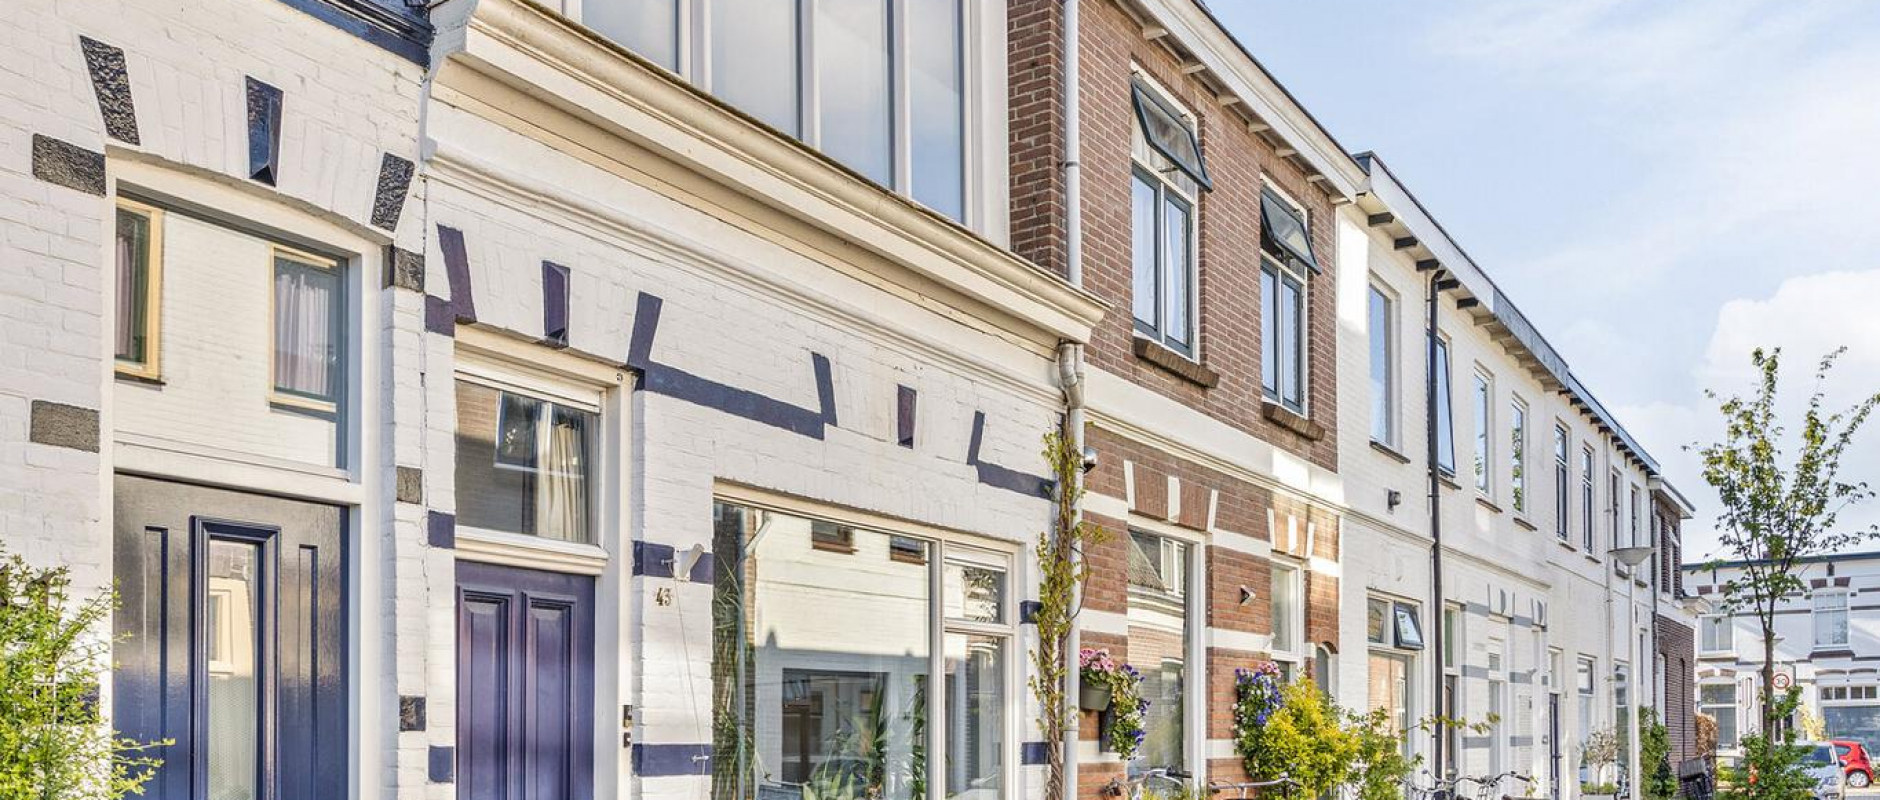 Woning te koop aan de Blokstraat 43 te Zwolle